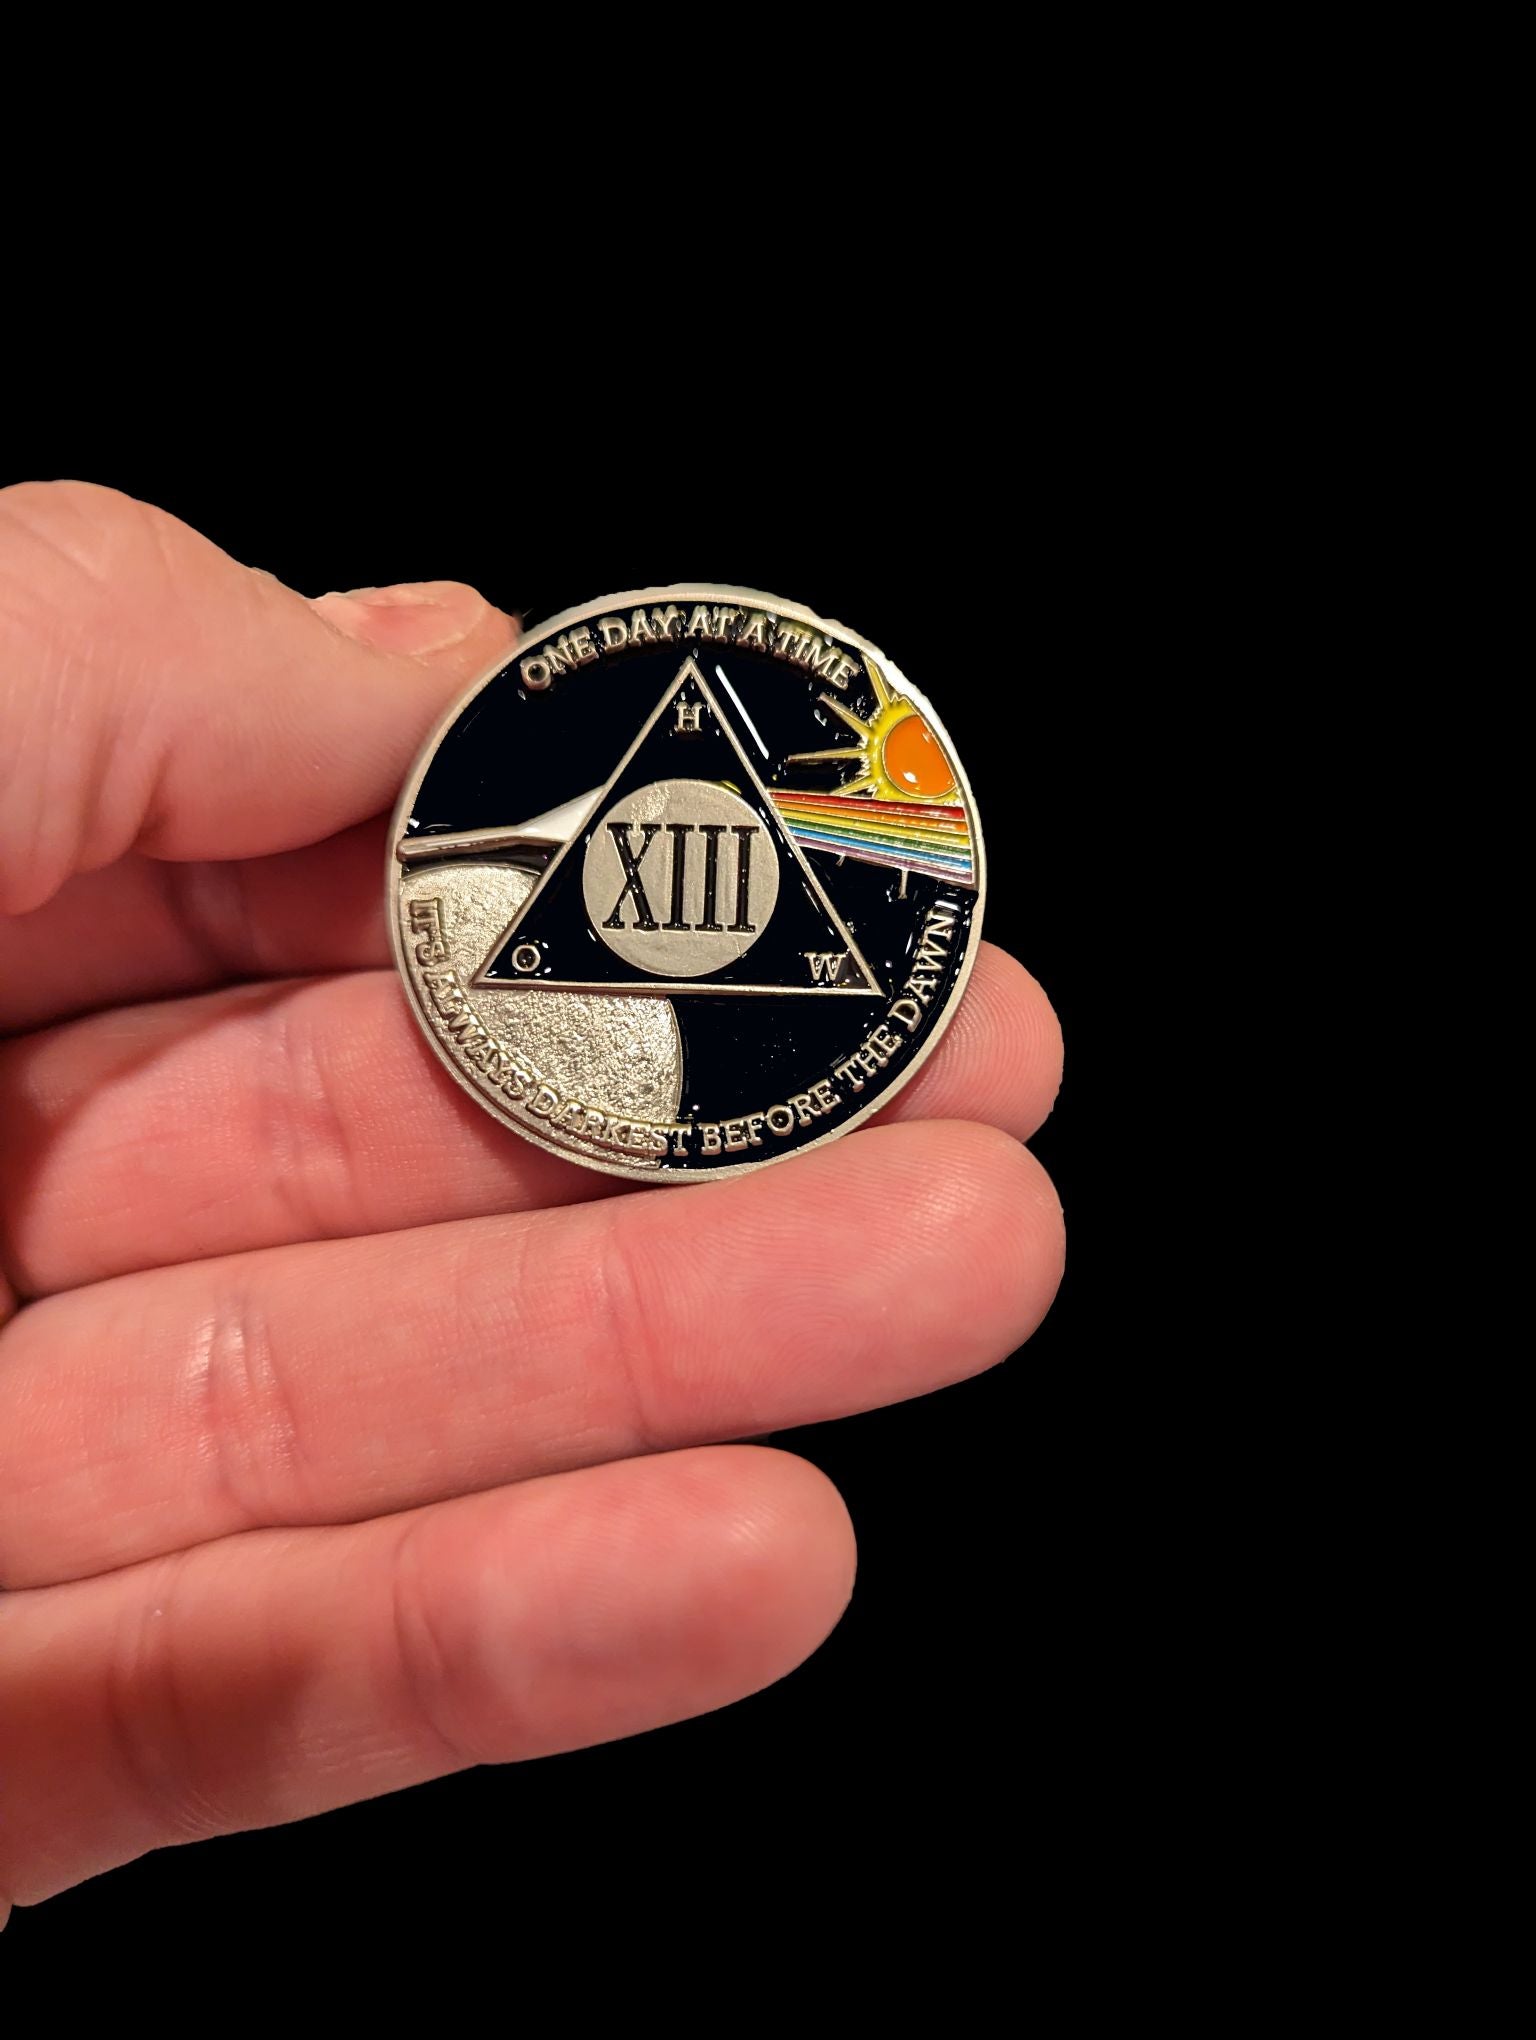 Sun & Moon AA Coin 24hr-11 Months Sobriety Chip